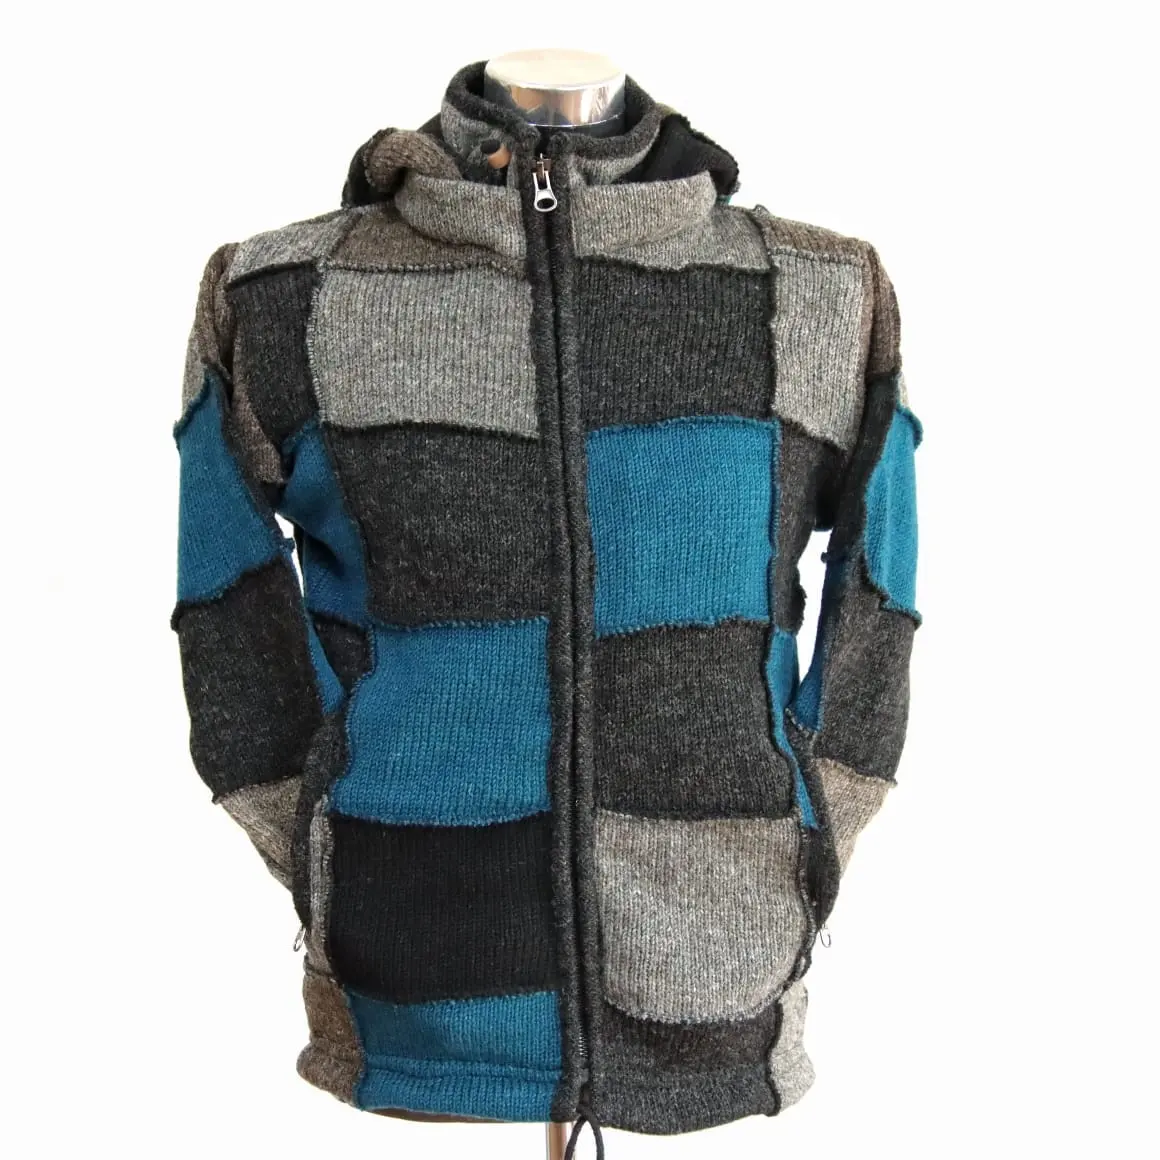 Winter Wool HippyJacket Cardigan Hoodies Winter Wholesale Clothing Handloom Good Coat Cheap Fast Delivery Unisex Made In Nepal